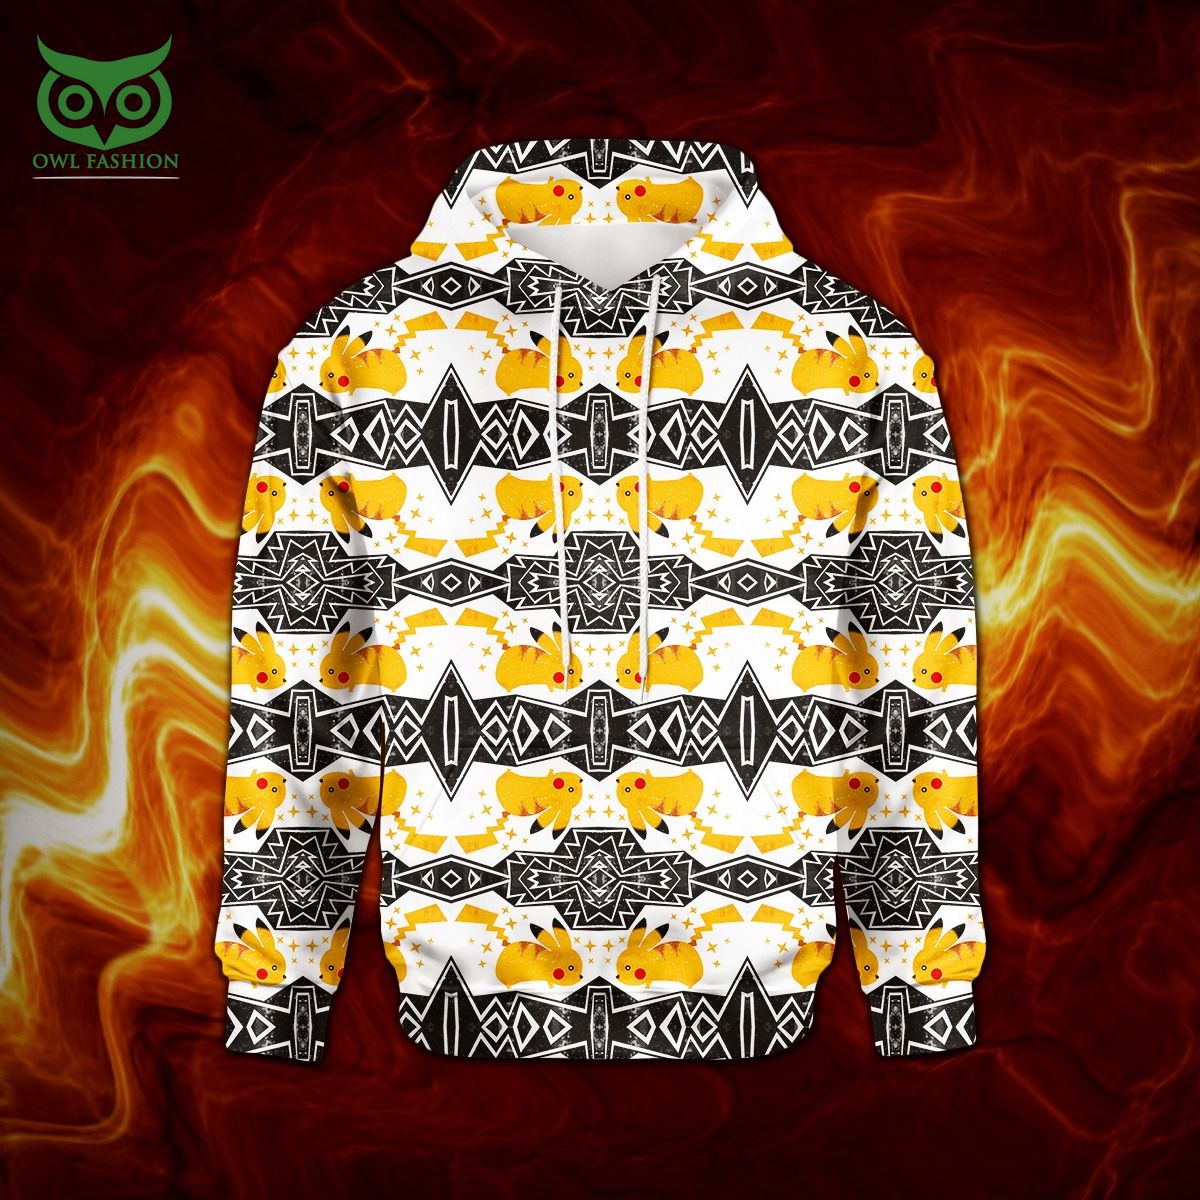 pikachu native american pattern pokemon 3d printed hoodie 1 3cST6